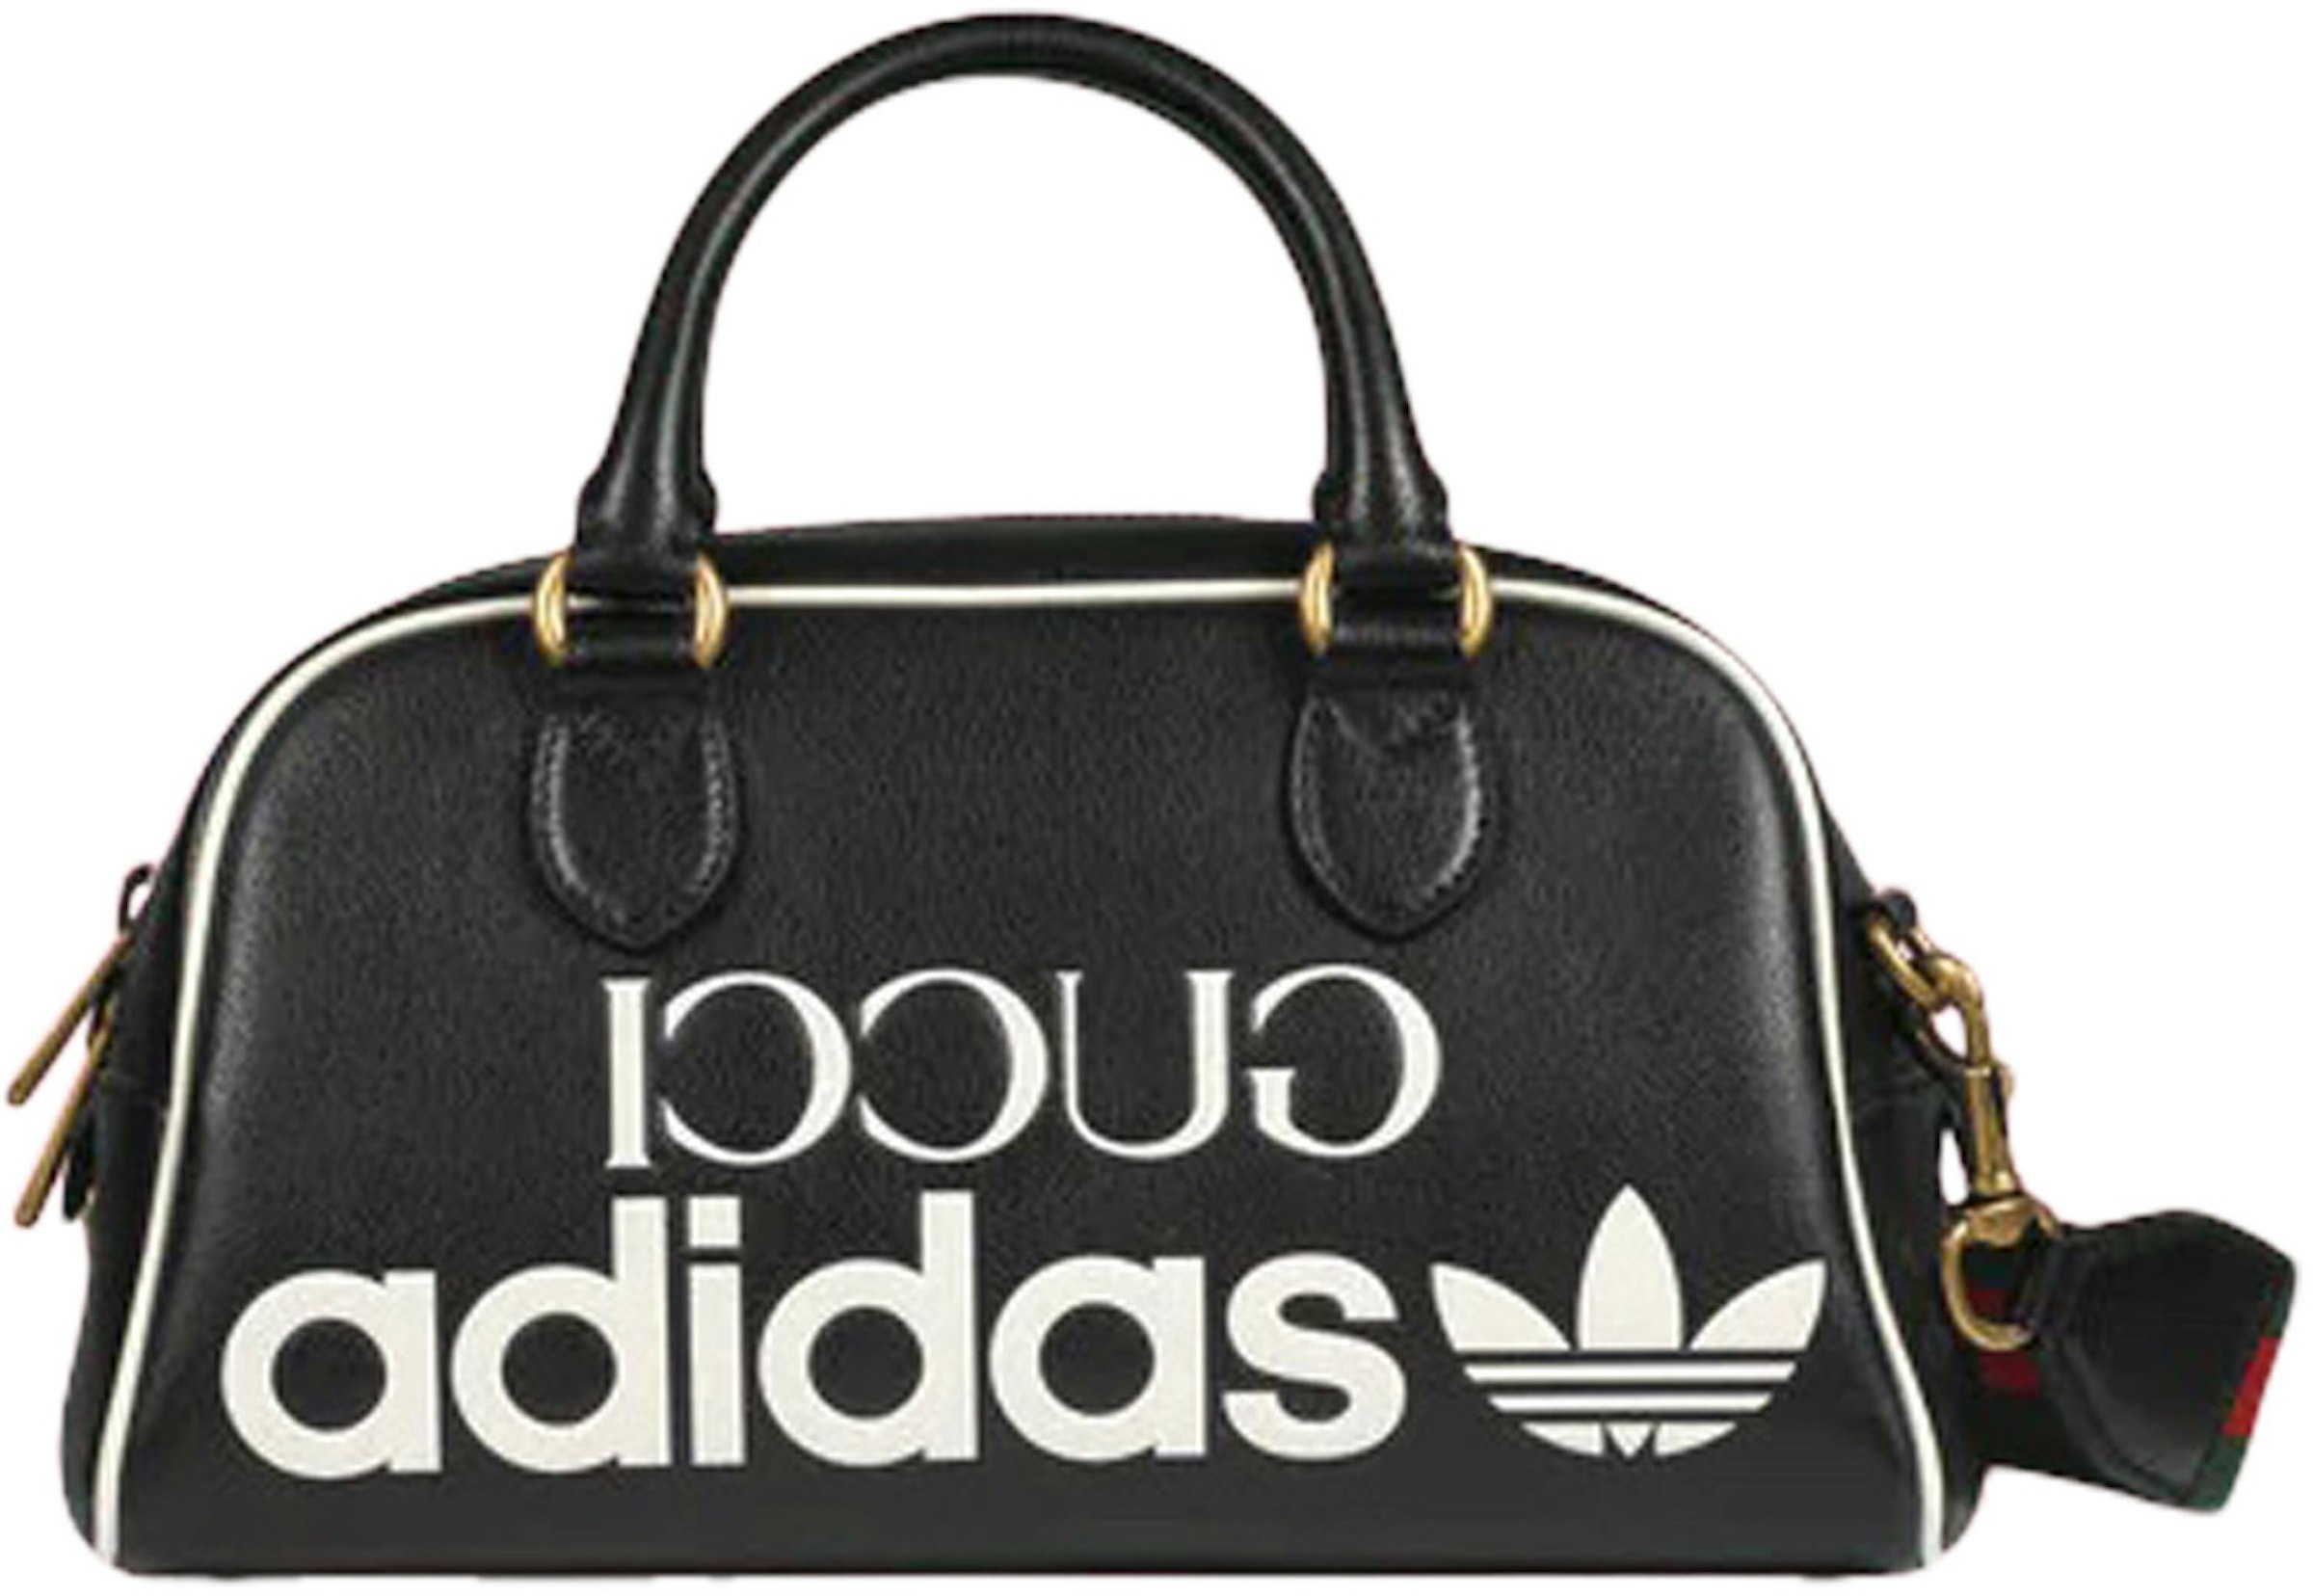 Gucci x adidas Mini Duffle Bag Black in Leather US